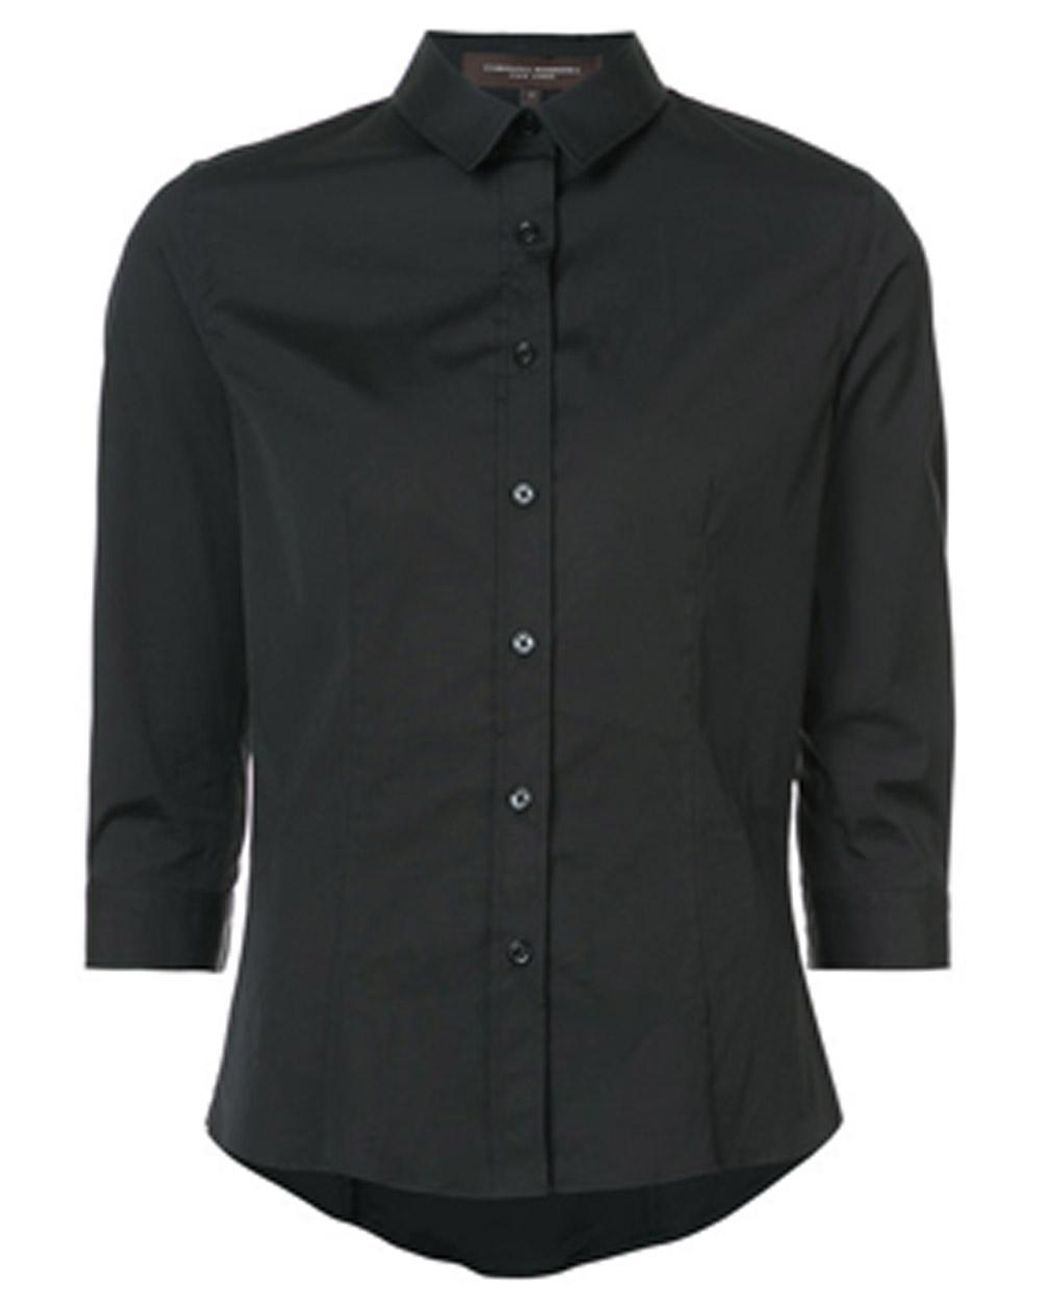 Carolina Herrera Fitted Classic Shirt in Black - Lyst